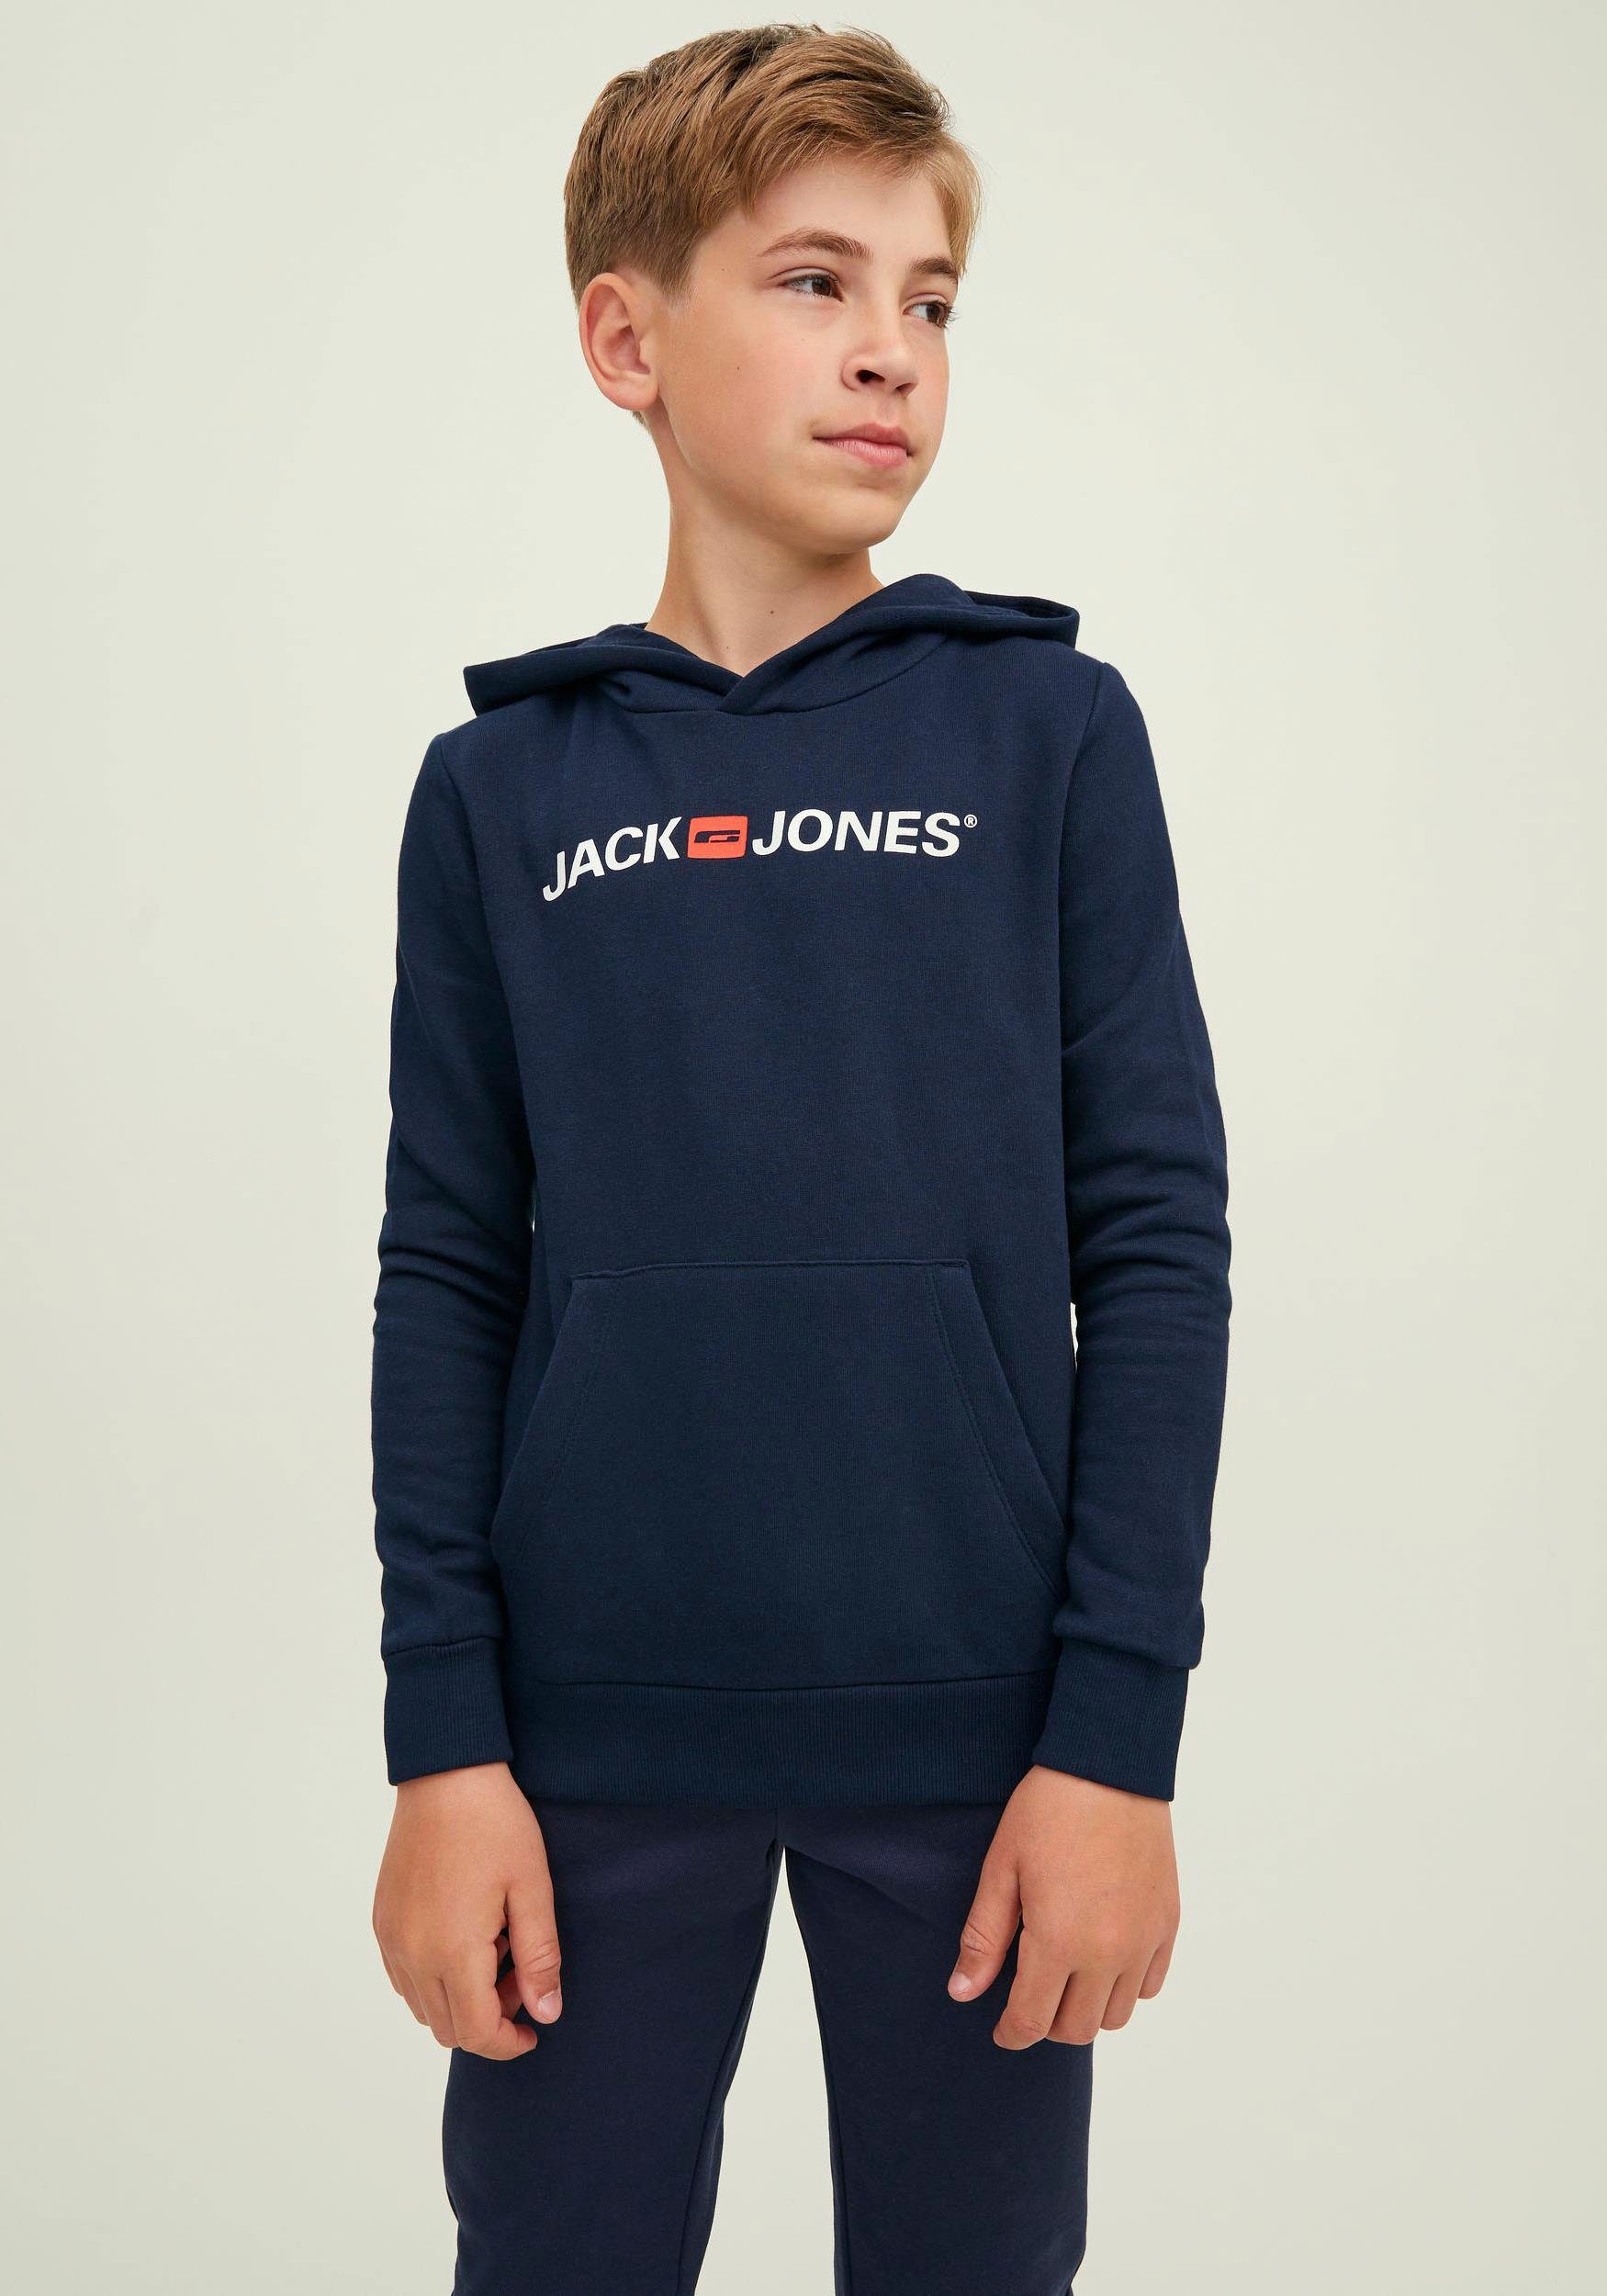 Junior Jones Teal & Deep Kapuzensweatshirt Jack